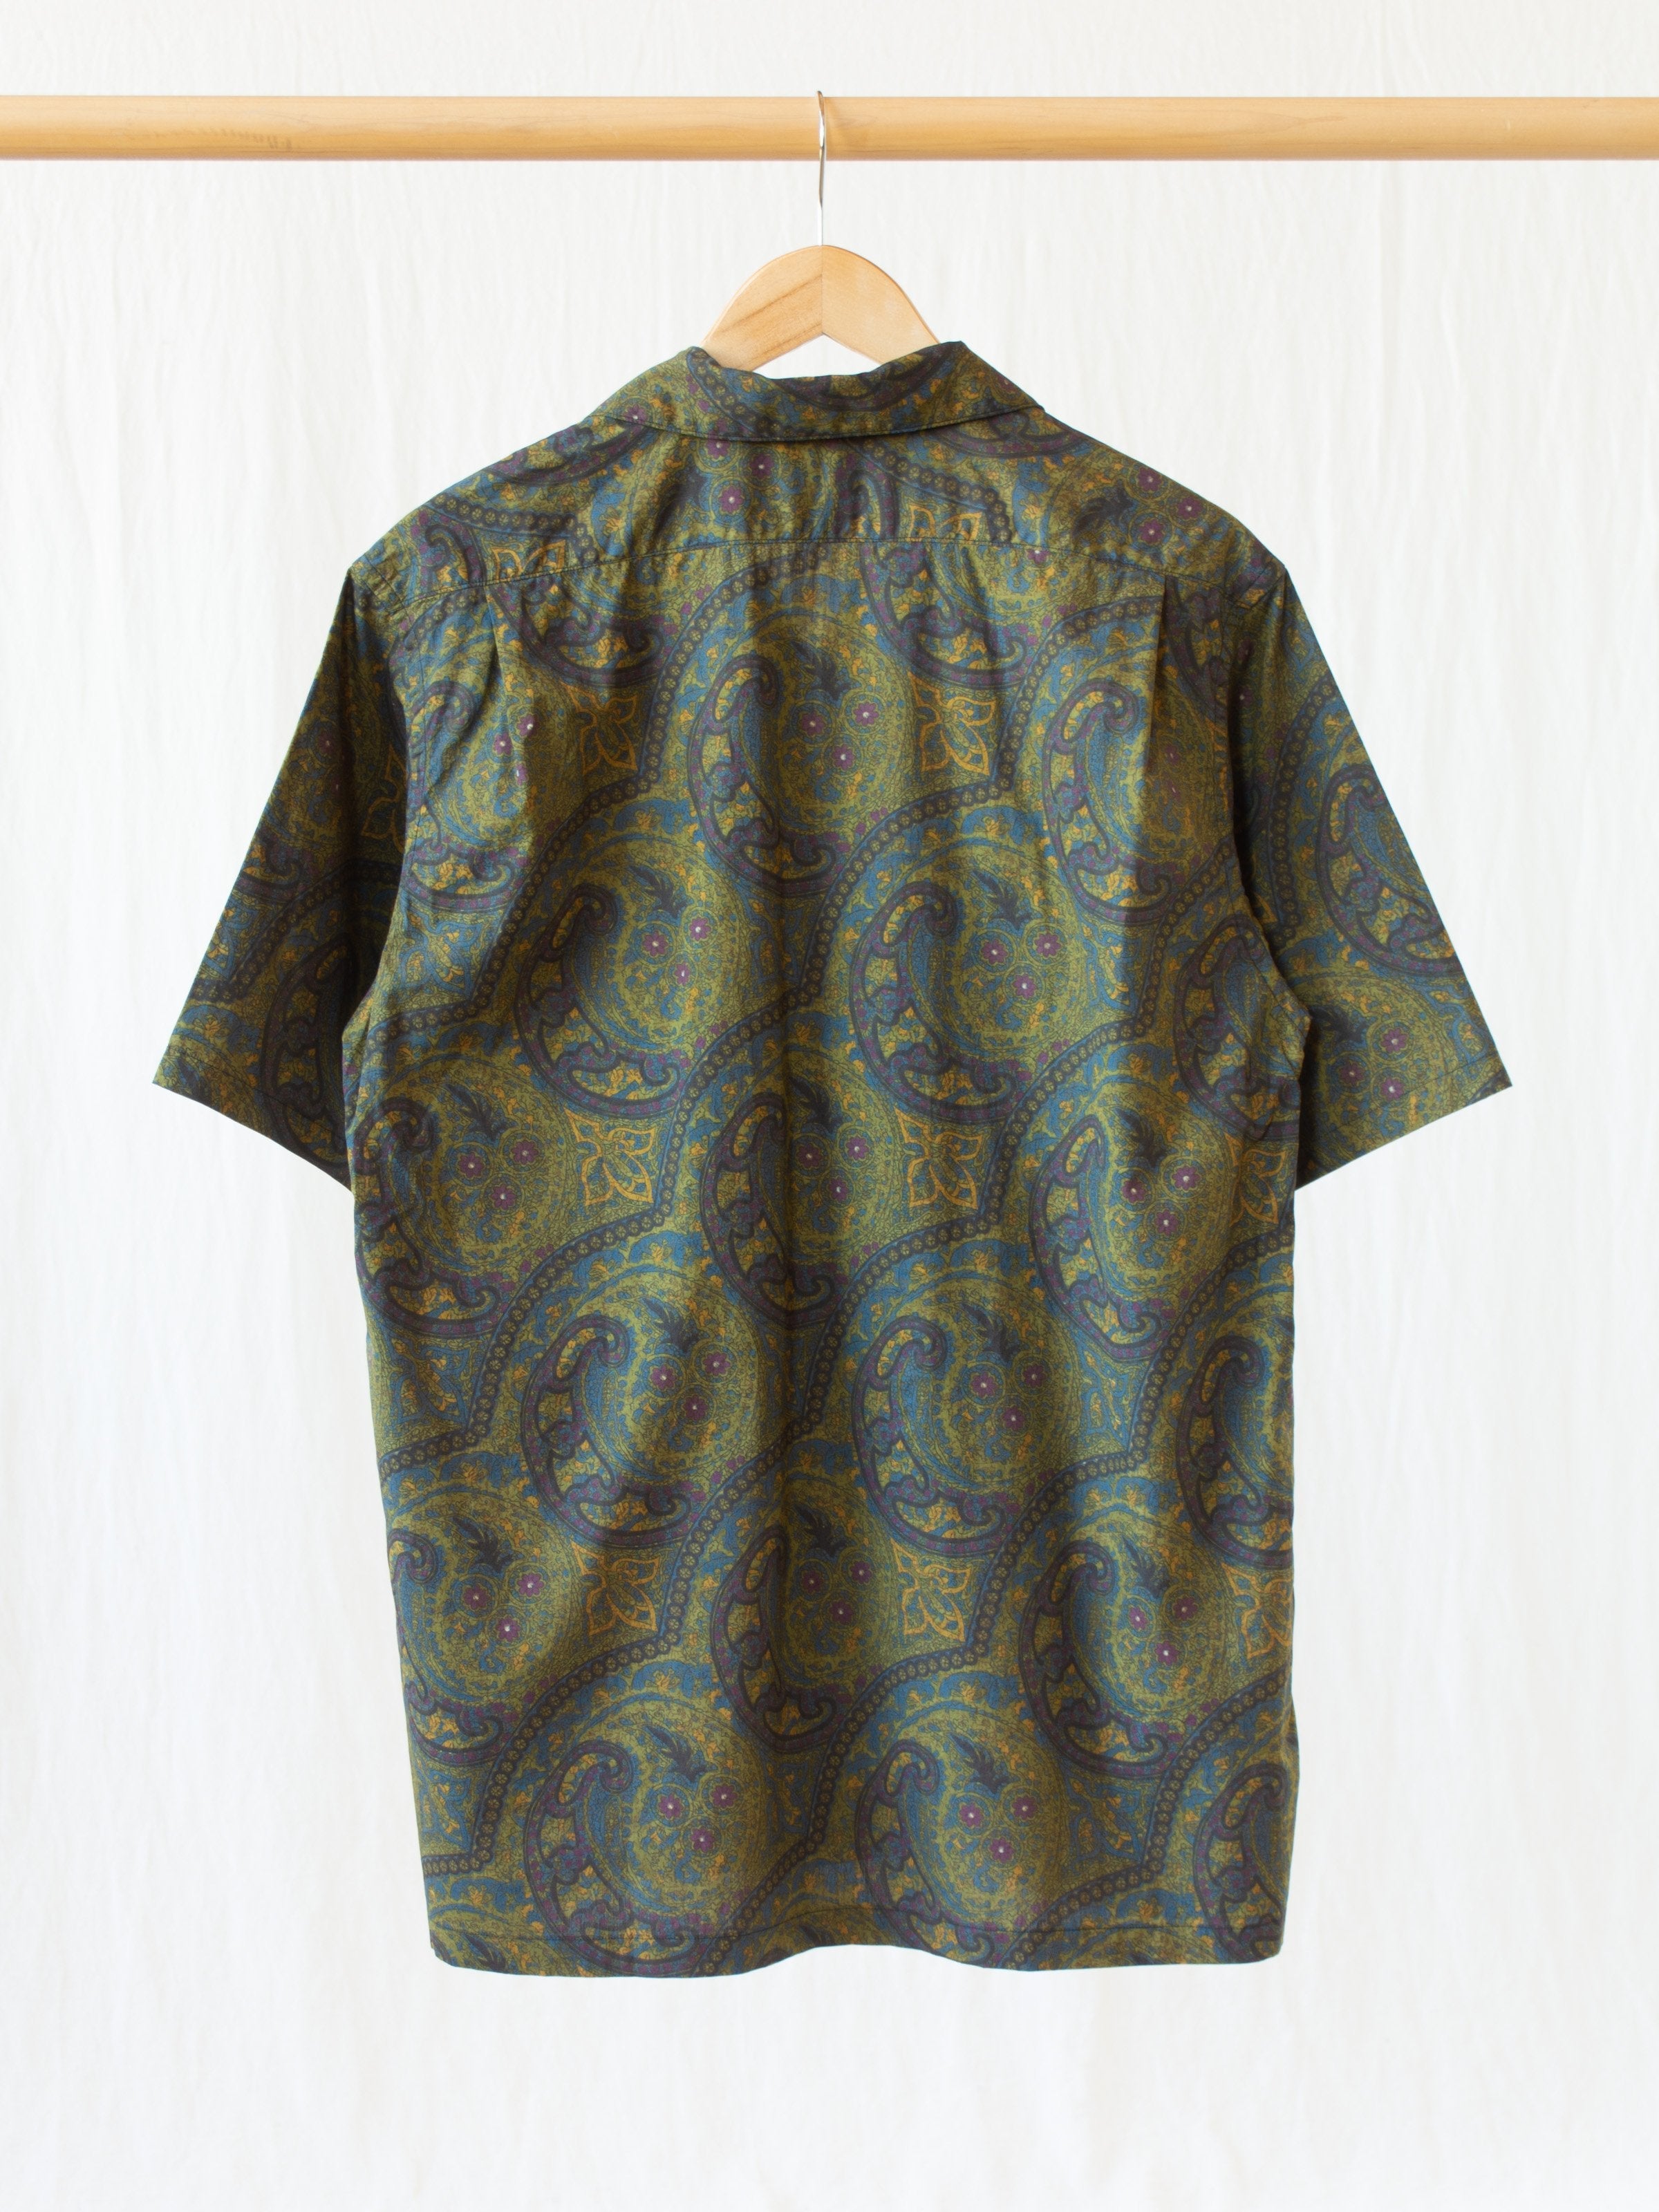 Namu Shop - Kaptain Sunshine Open Collar S/S Shirt - Hand Printed Dark Paisley